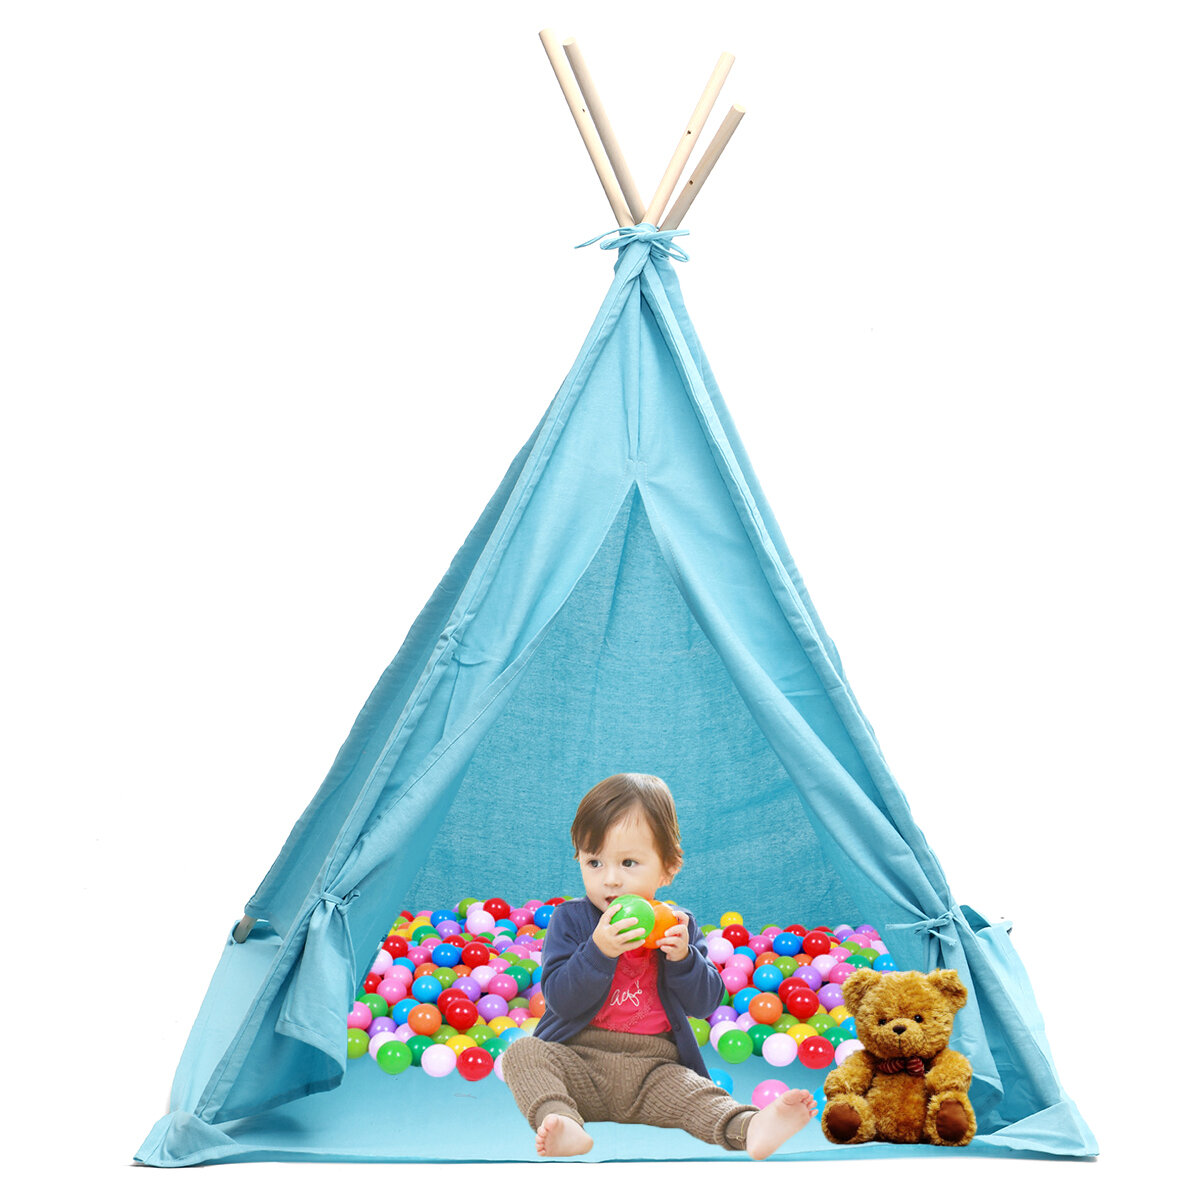 1.6 / 1.8M Παιδικά Παιχνίδια Σκηνές Βαμβάκι Canva Πτυσσόμενο Εσωτερικό Υπαίθριο Playhouse Τρίγωνο Ινδικό Παιδικό Παιχνίδι Baby Funny House Wigwam Camping Tent